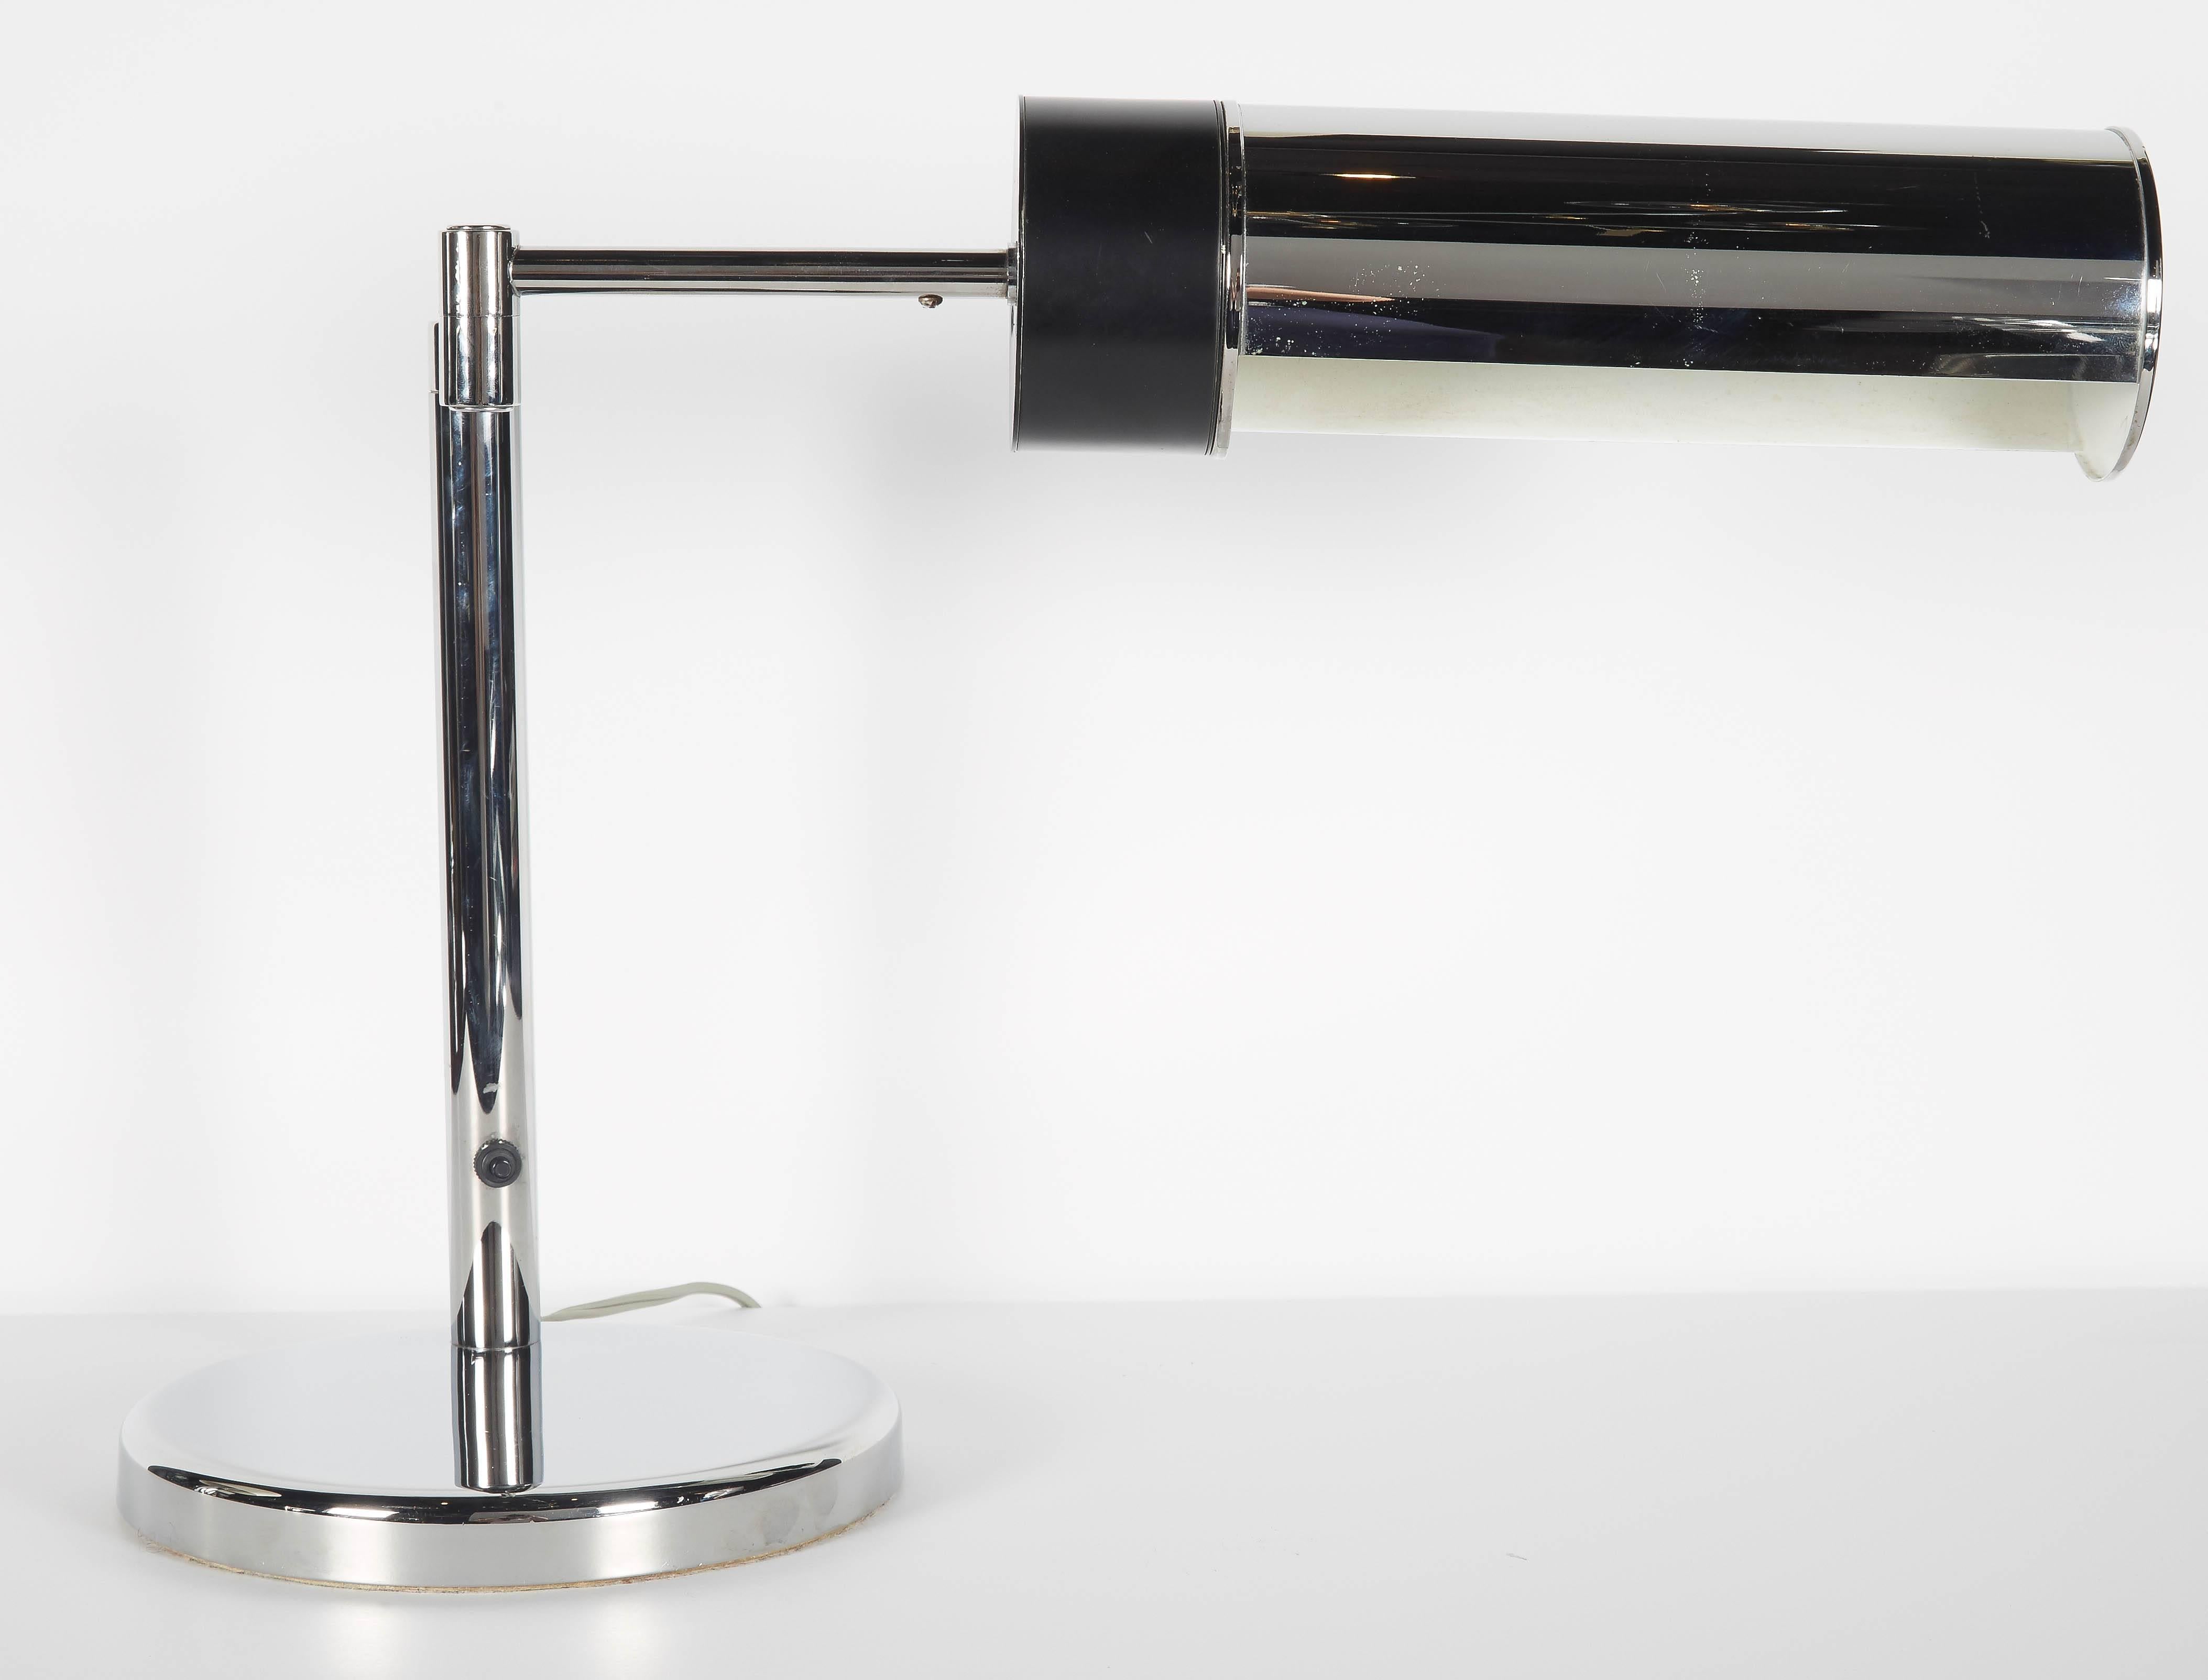 Enameled Mid-Century Modern Chrome Desk Lamp with Swing Arm by Walter Von Nessen, 1960s